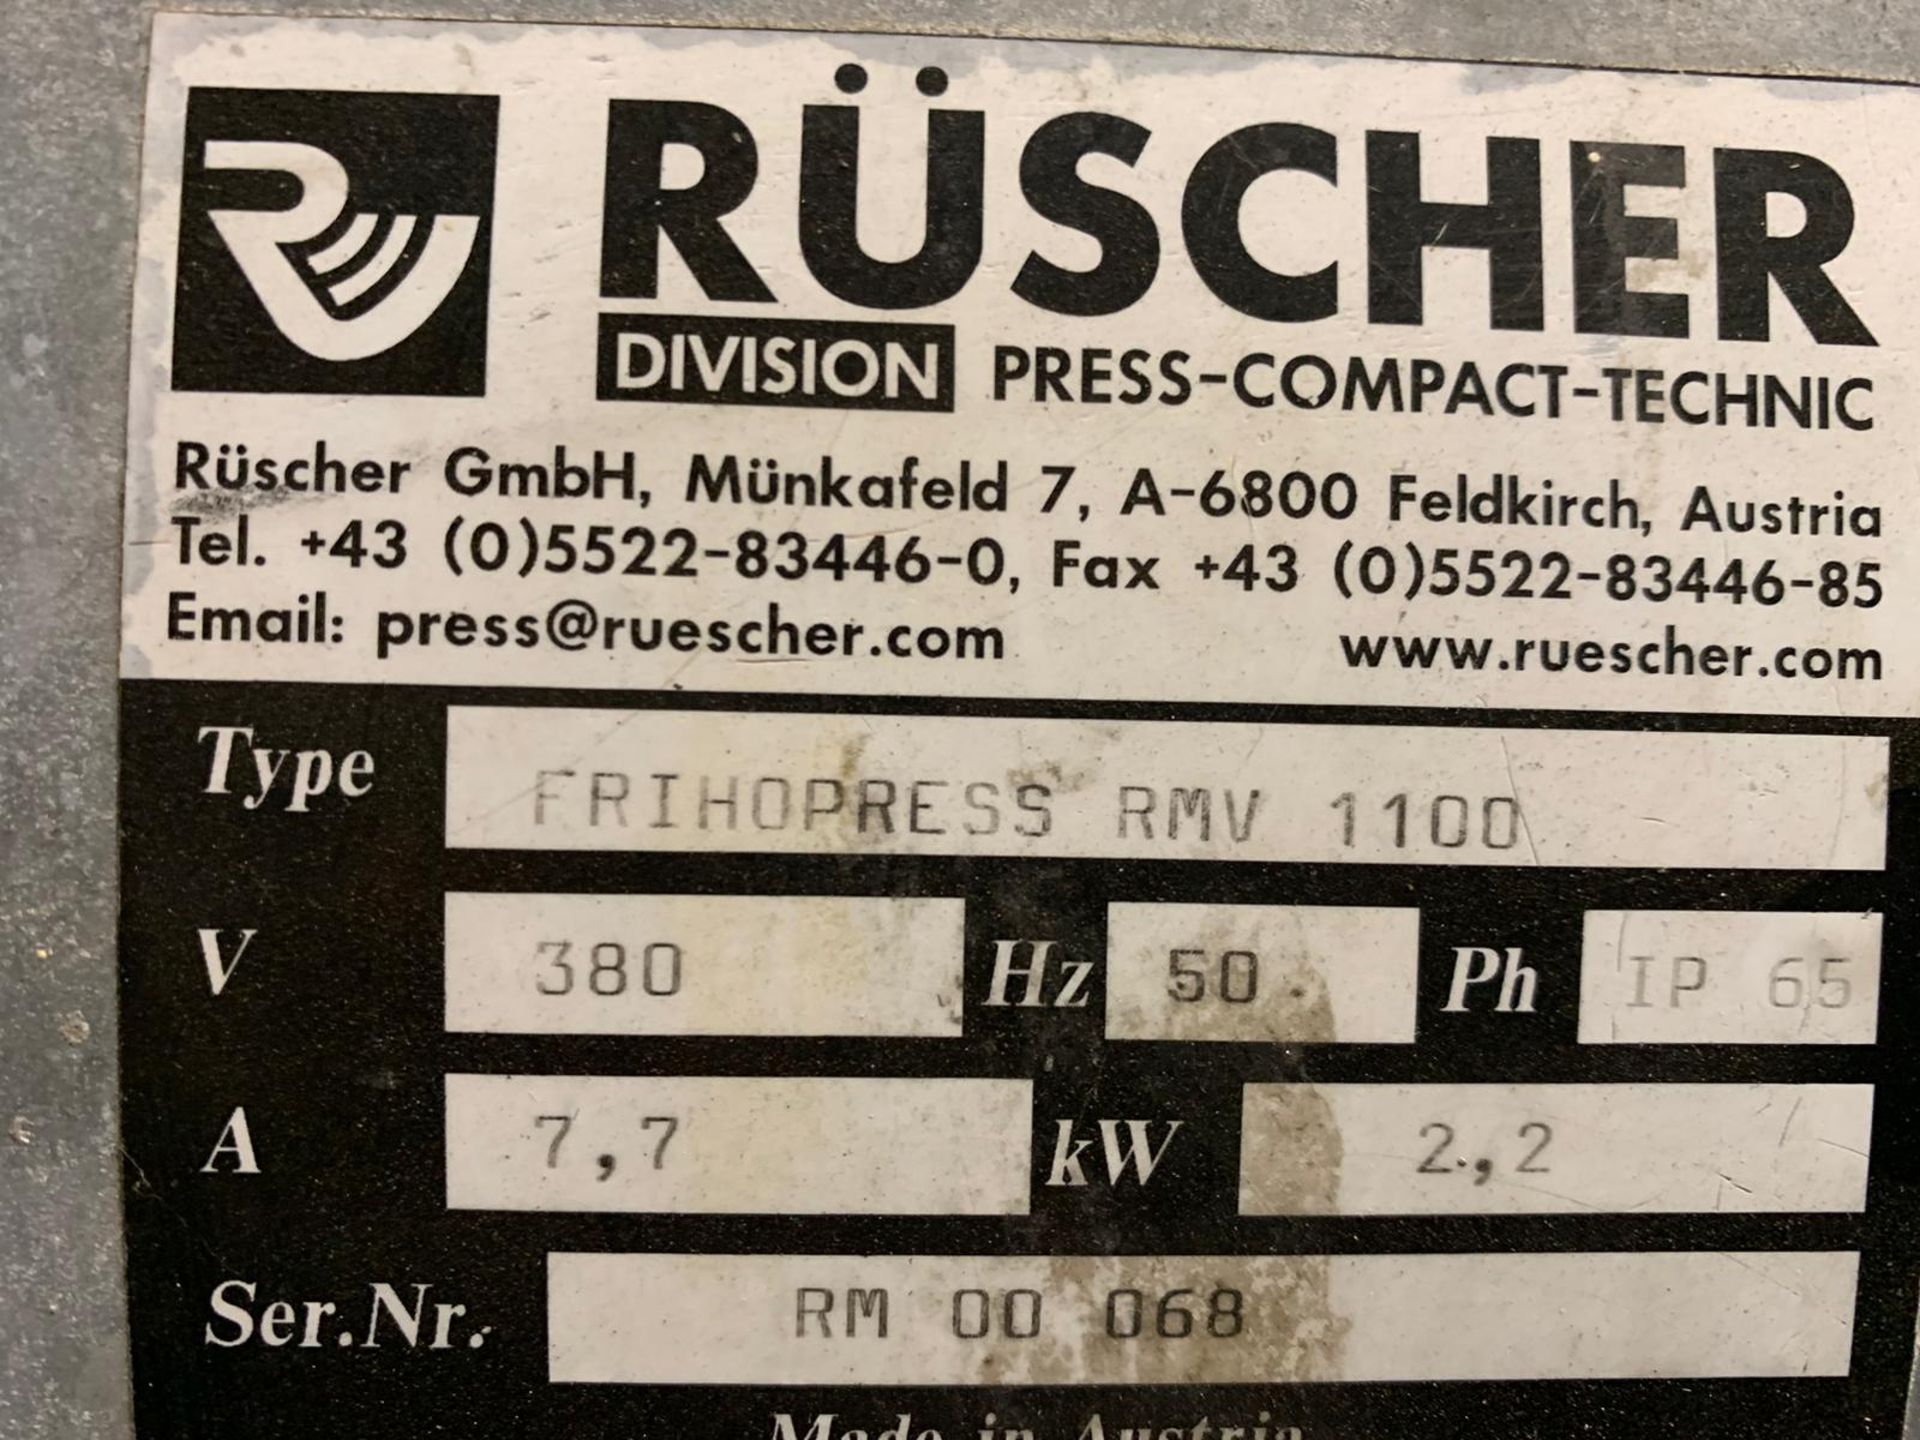 Ruscher Frihopress RMV 1100 residual waste compactor - Image 2 of 4